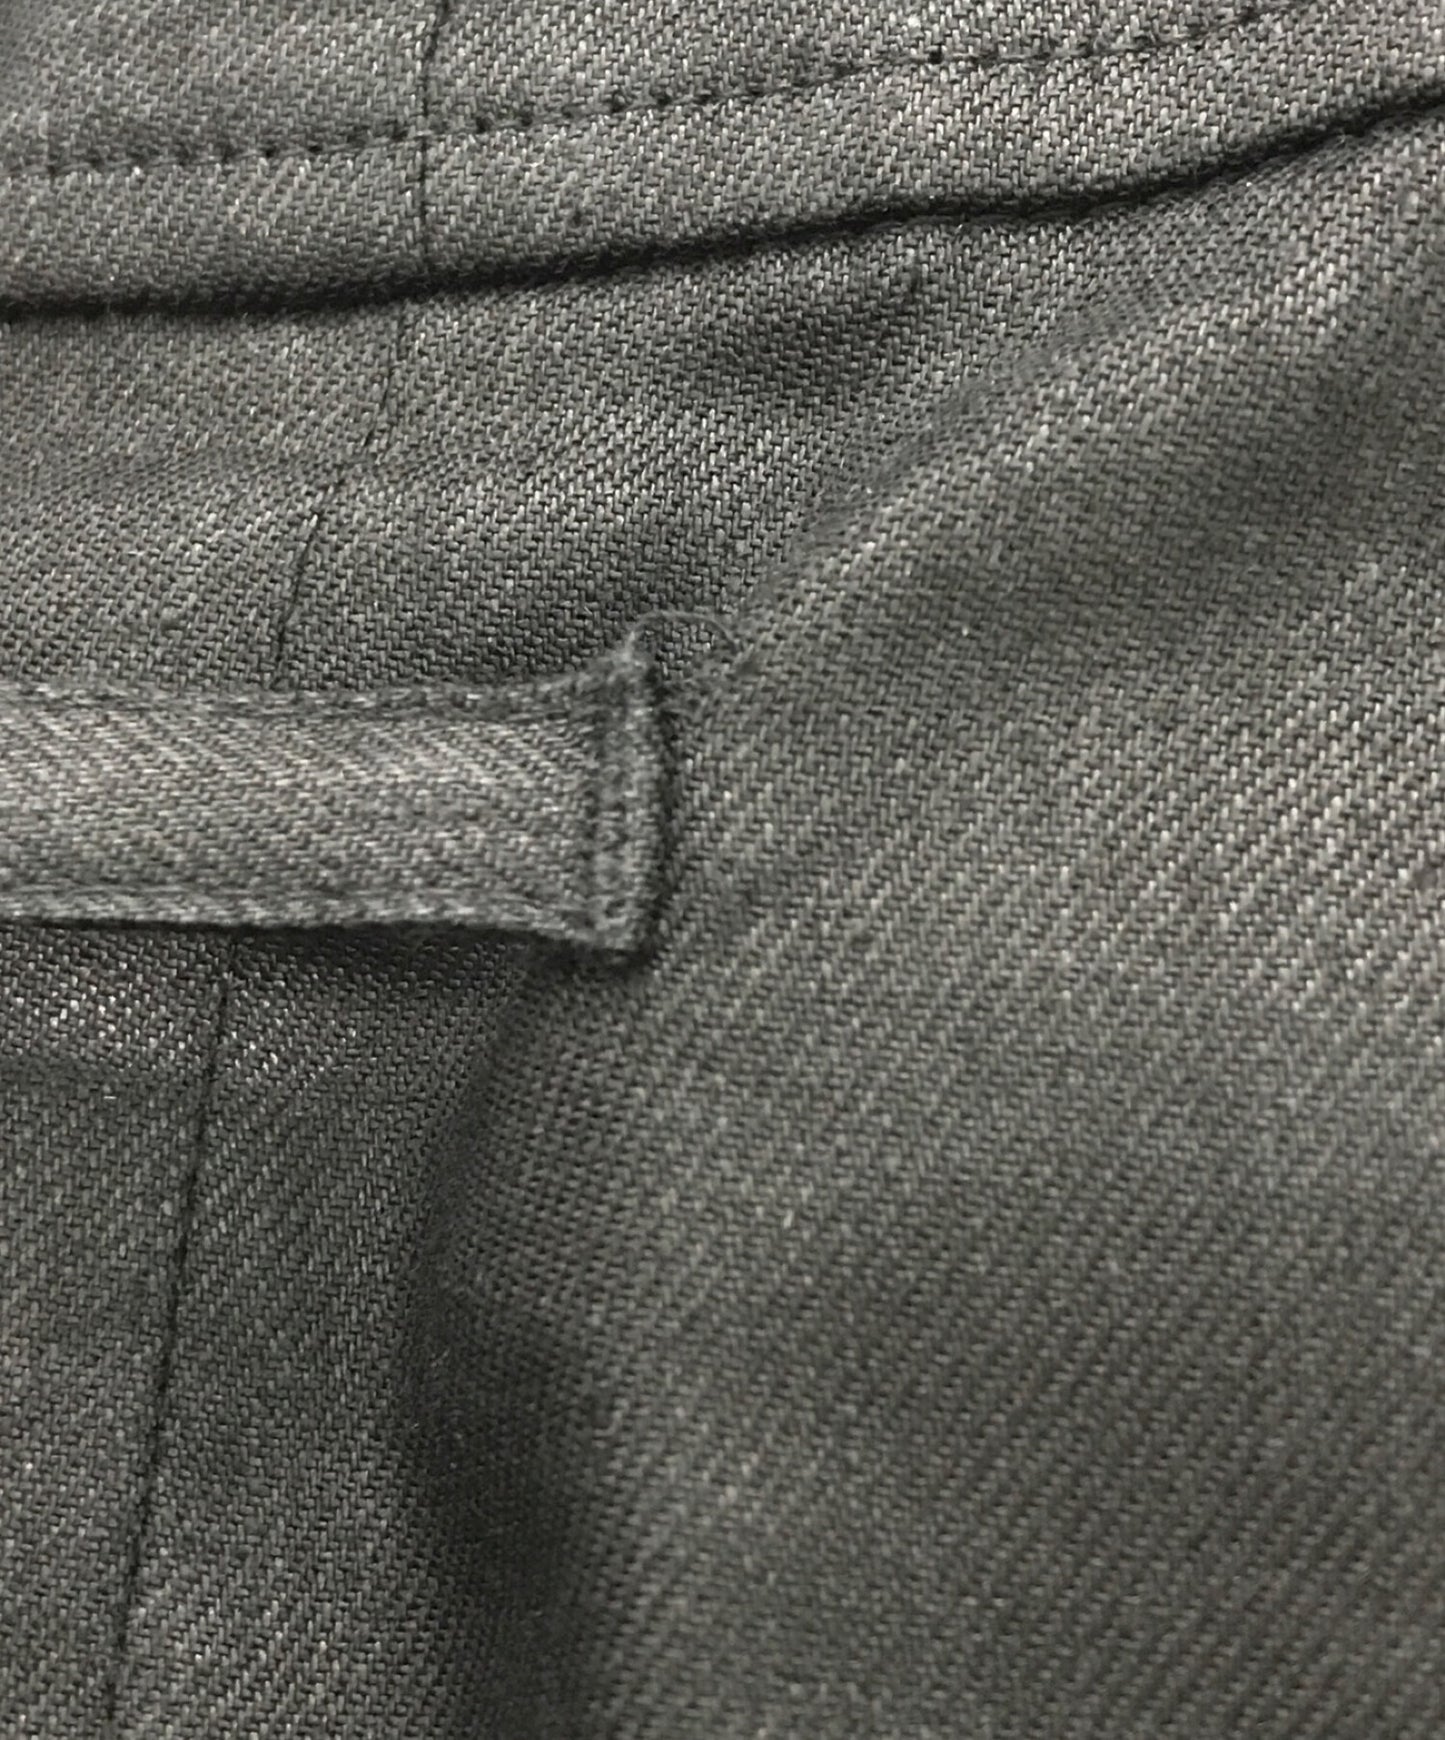 [Pre-owned] Jean Paul GAULTIER Double Zip Design Skirt SKJB-CM2-3067